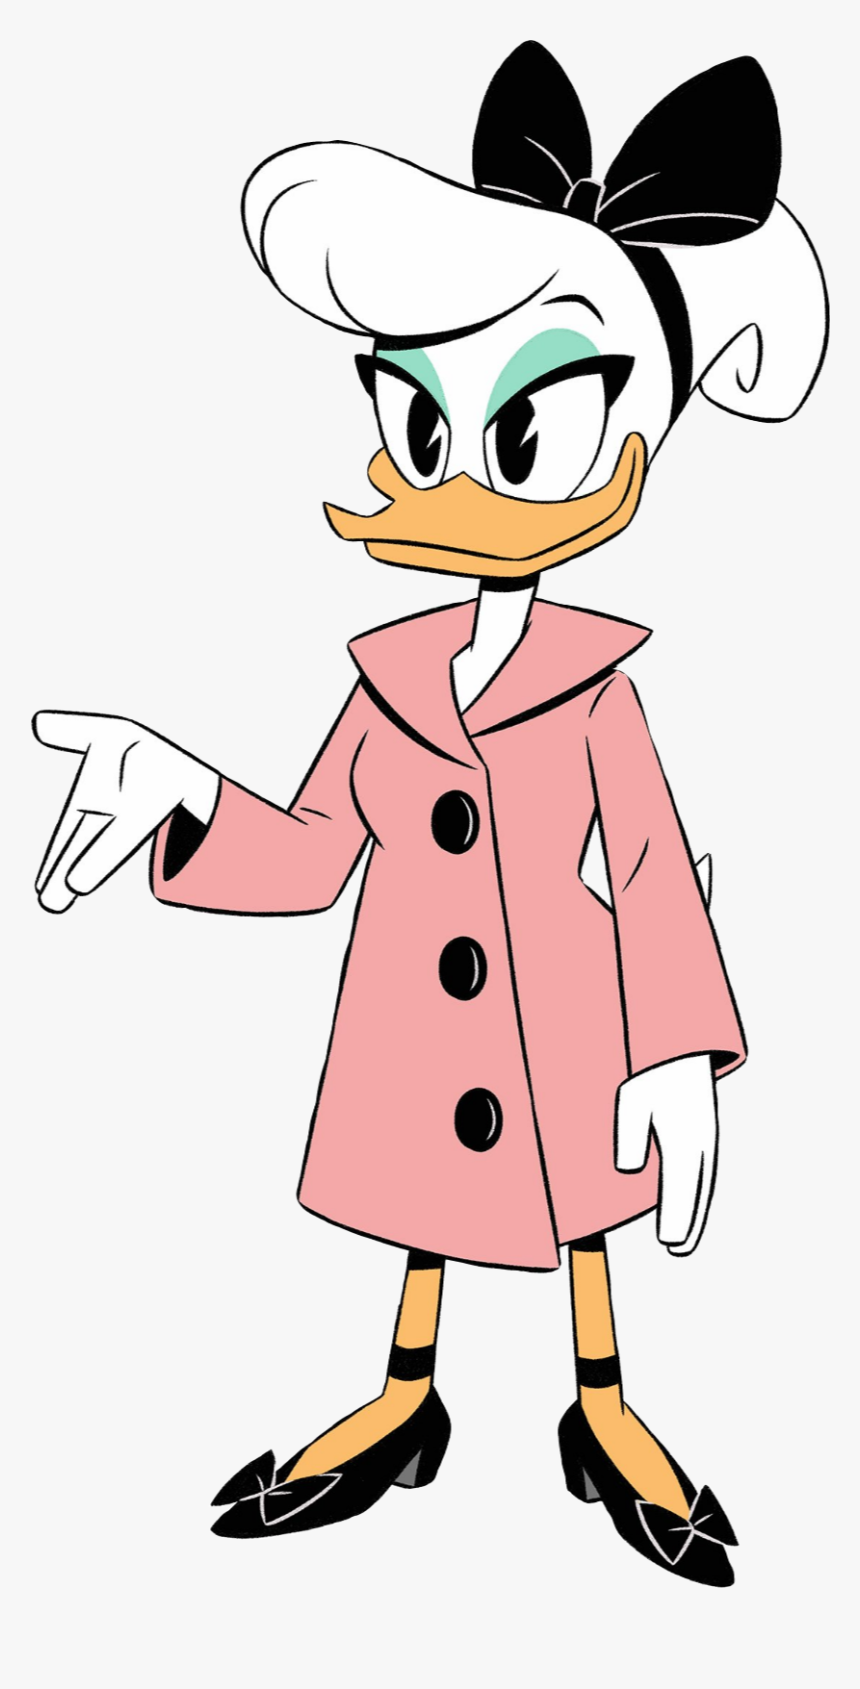 Daisy Duck In Ducktales Reboot - Daisy Duck Ducktales 2017